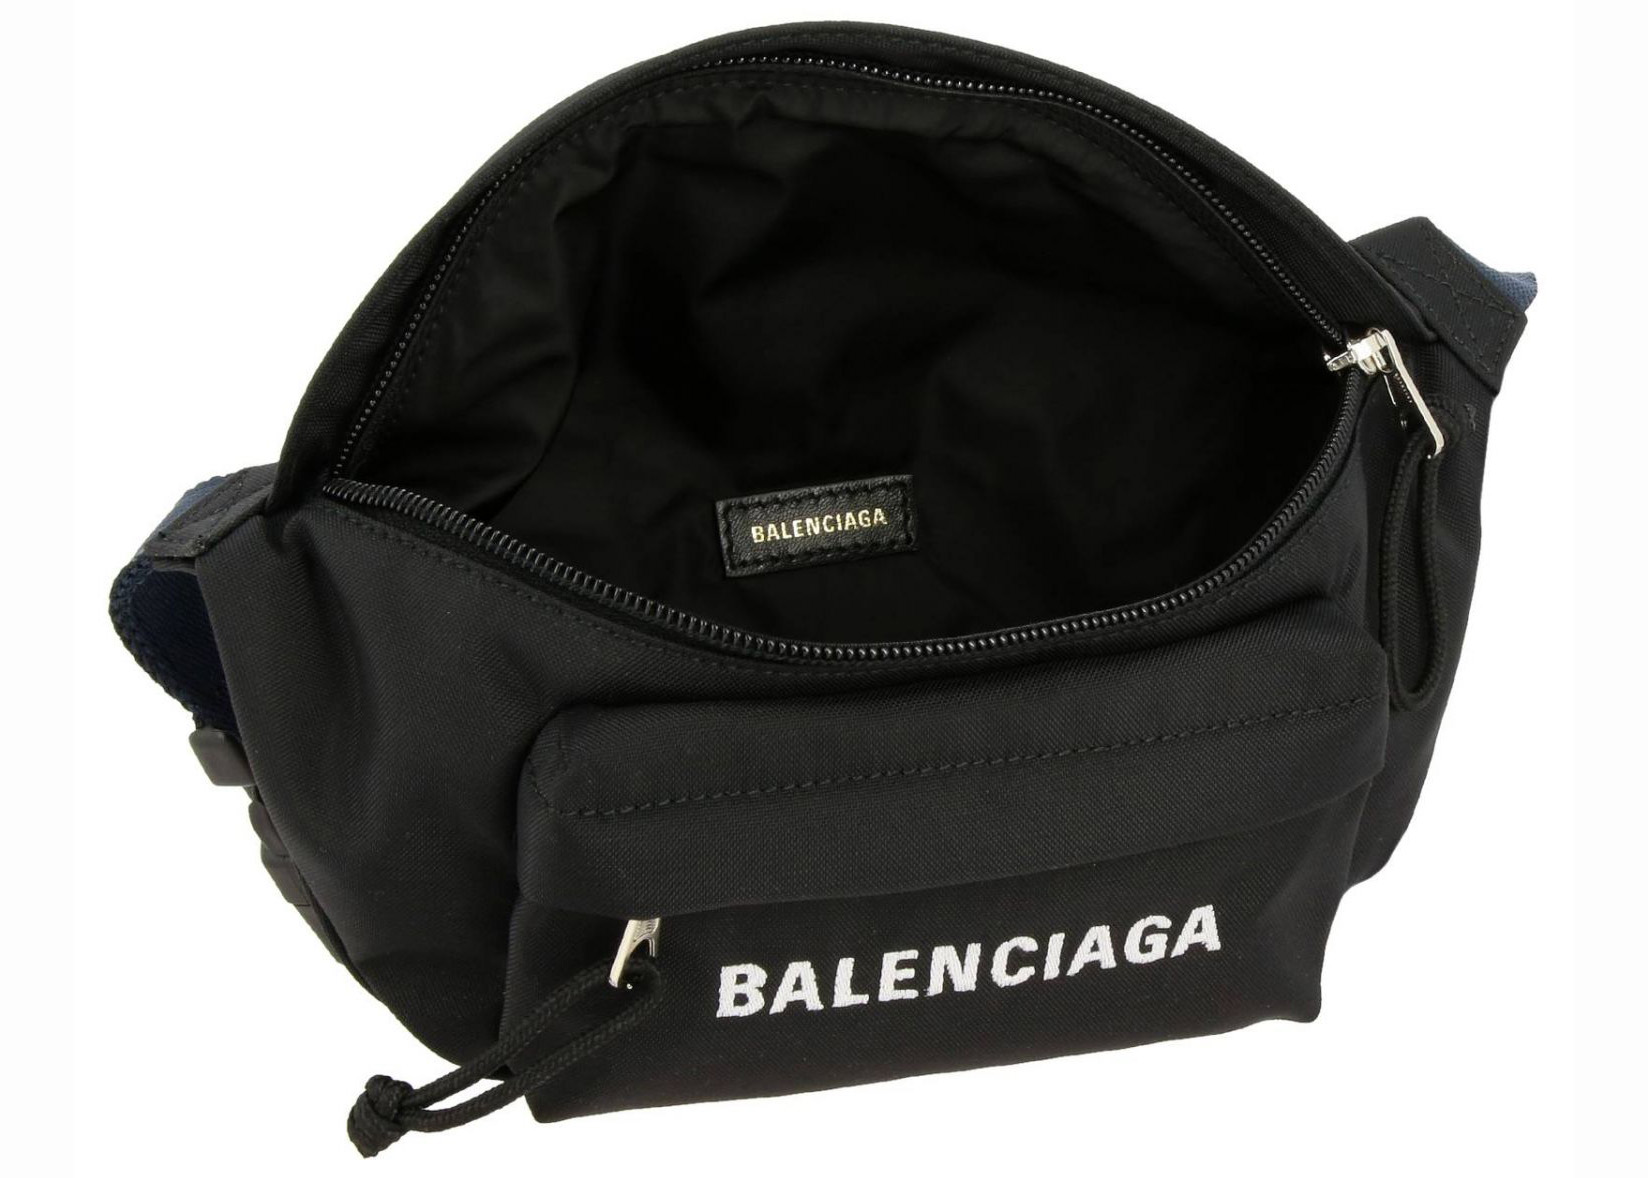 Balenciaga Wheel Beltpack Small Black/Navy in Nylon with Dark 